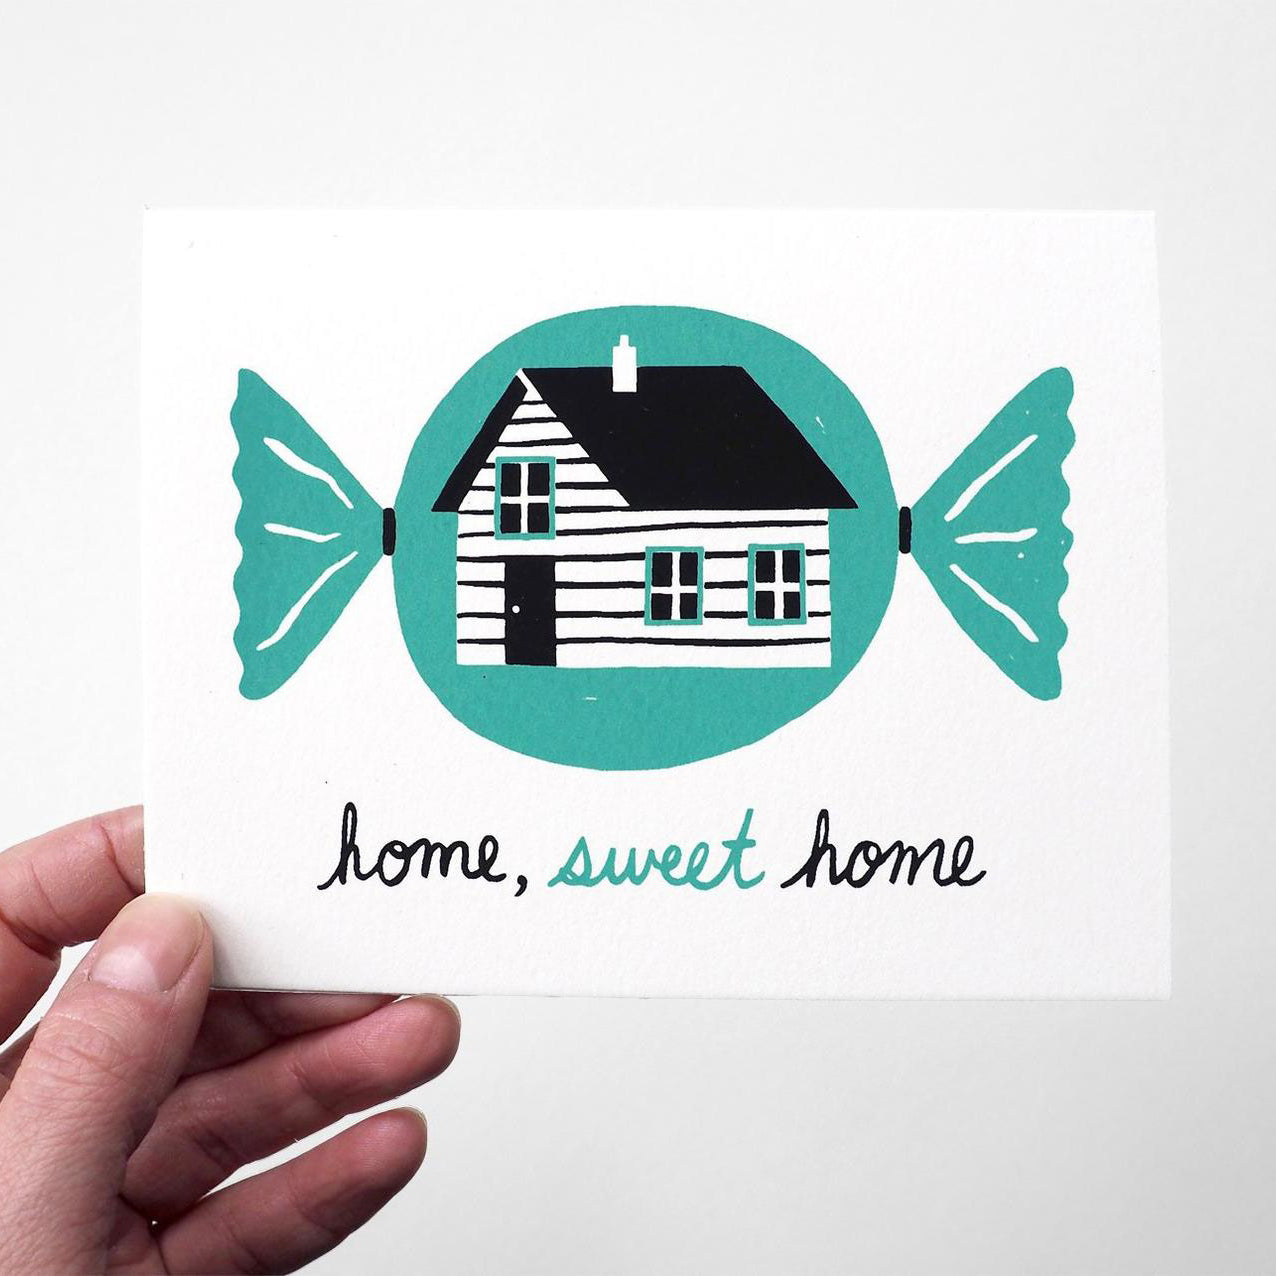 Home, Sweet Home Card